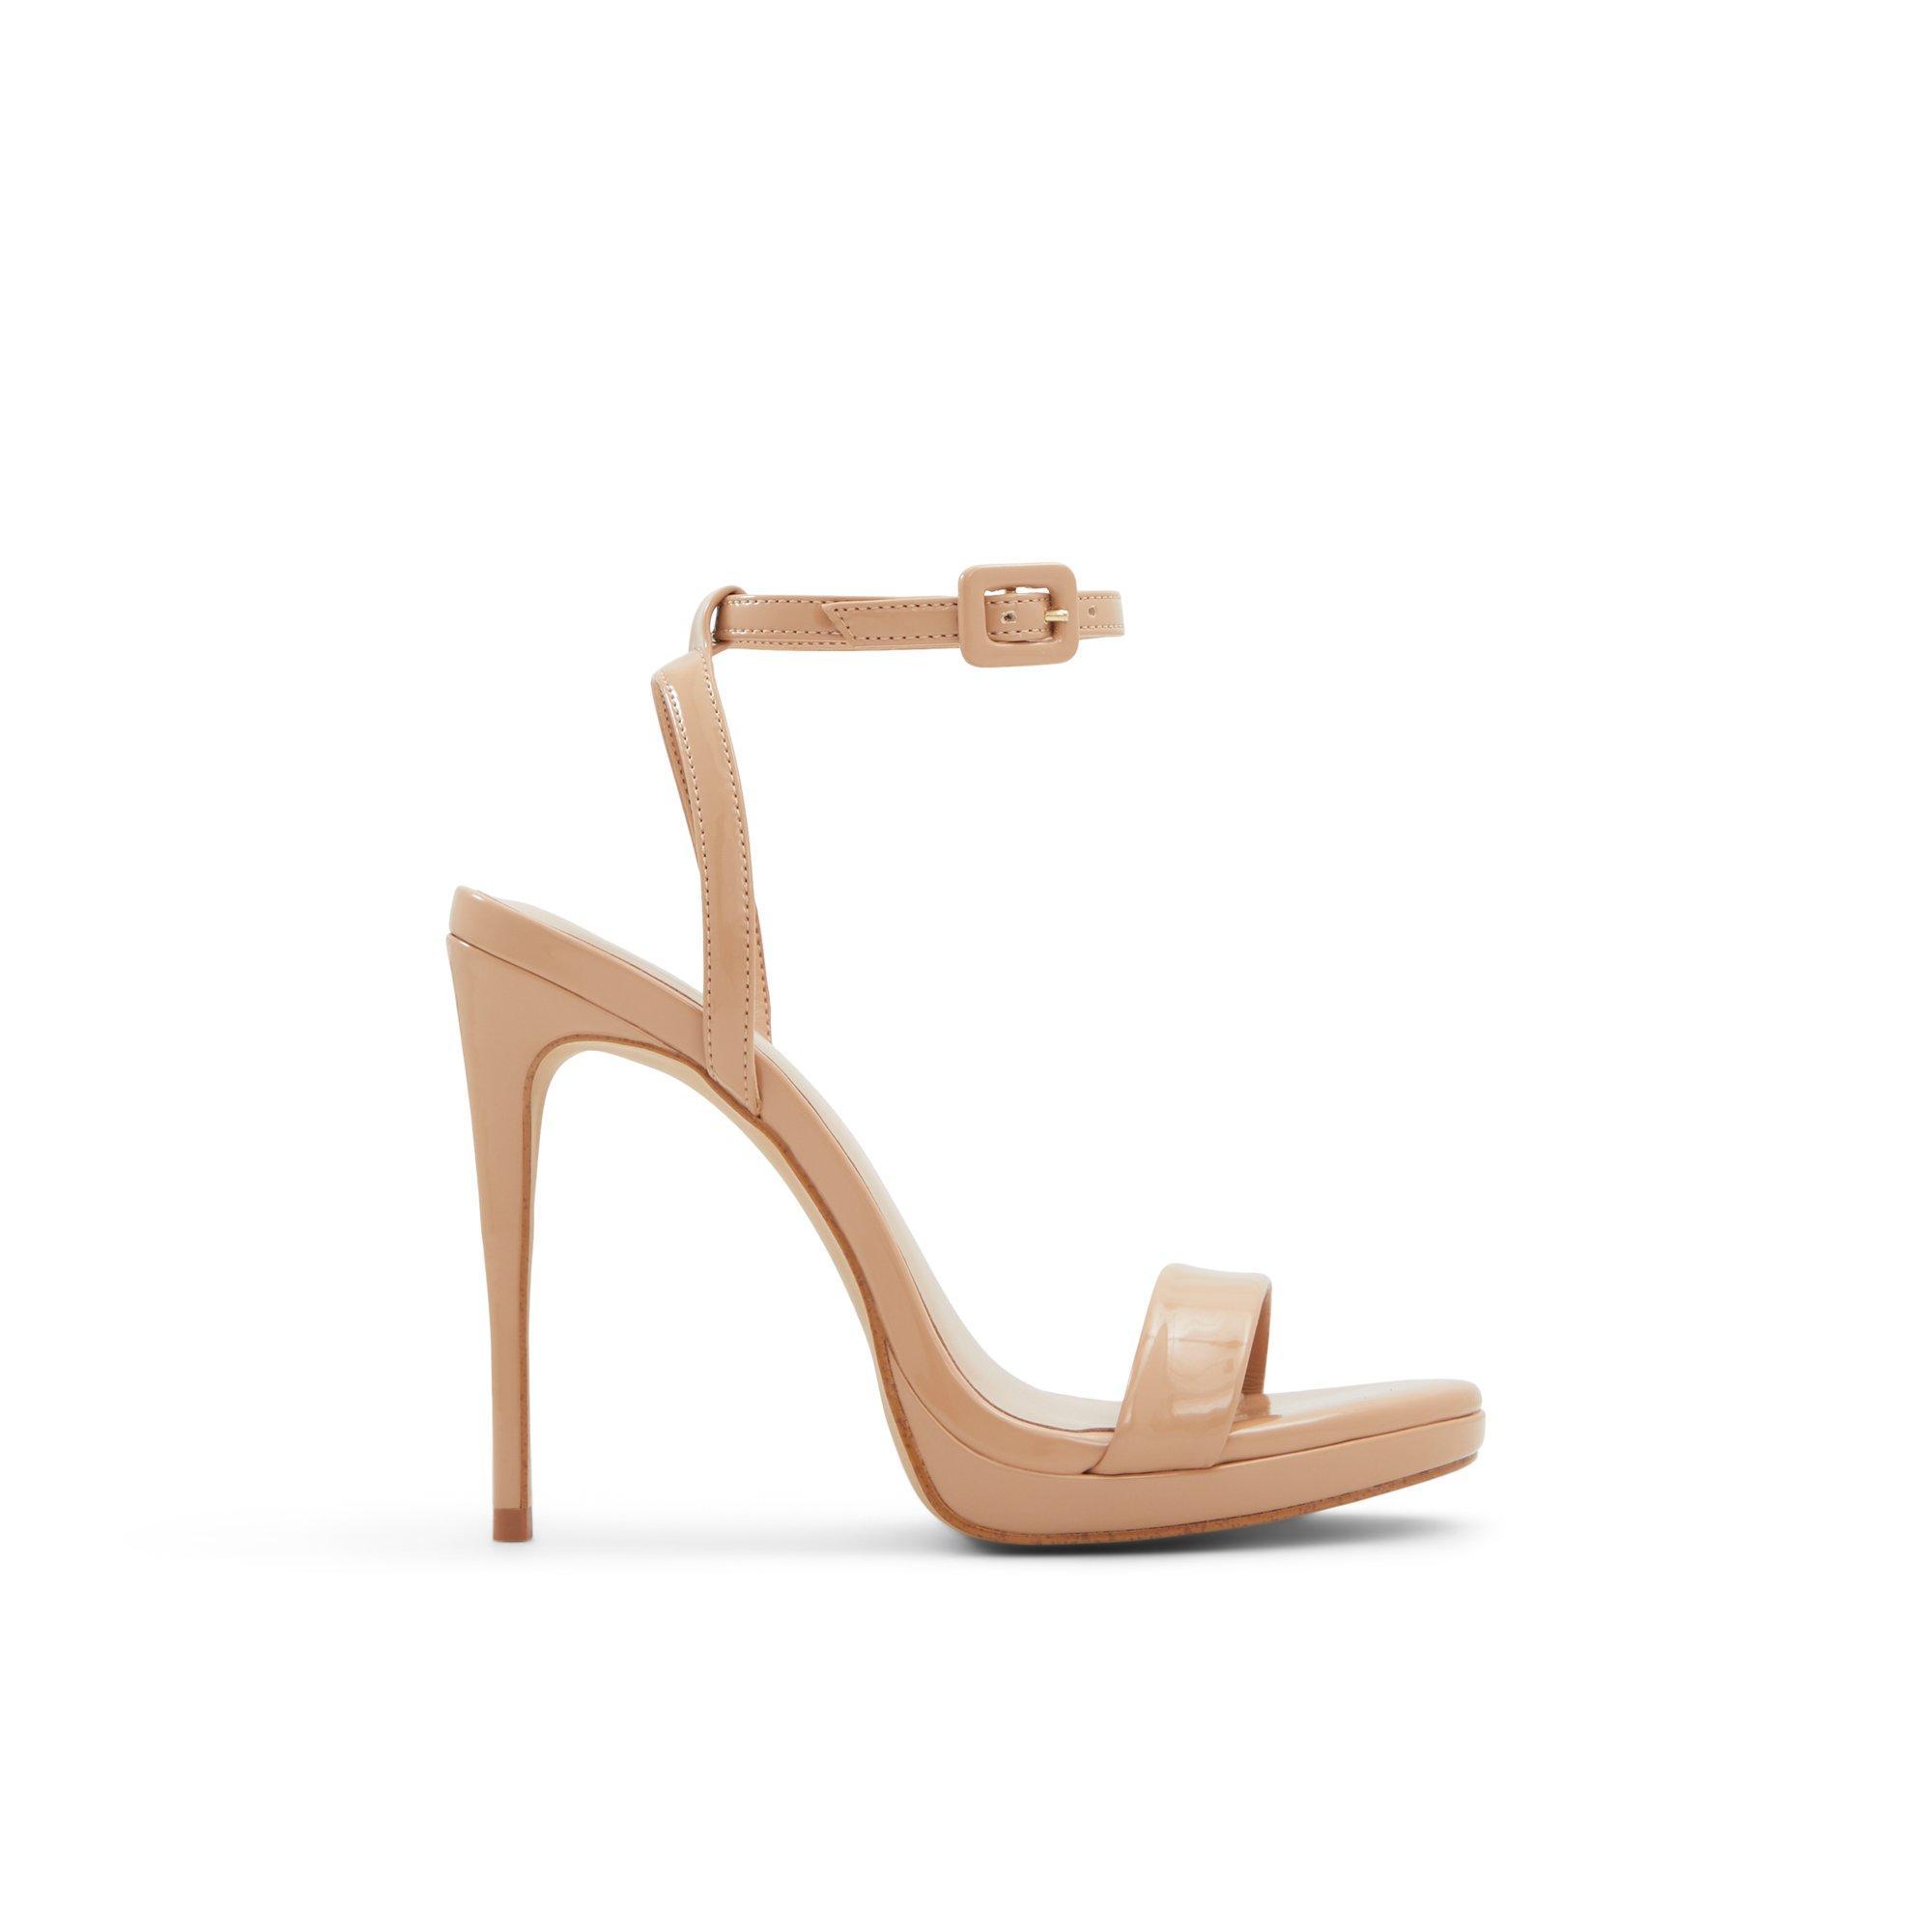 ALDO Kat - Womens Strappy Sandal Sandals - Beige, Size 6 Product Image